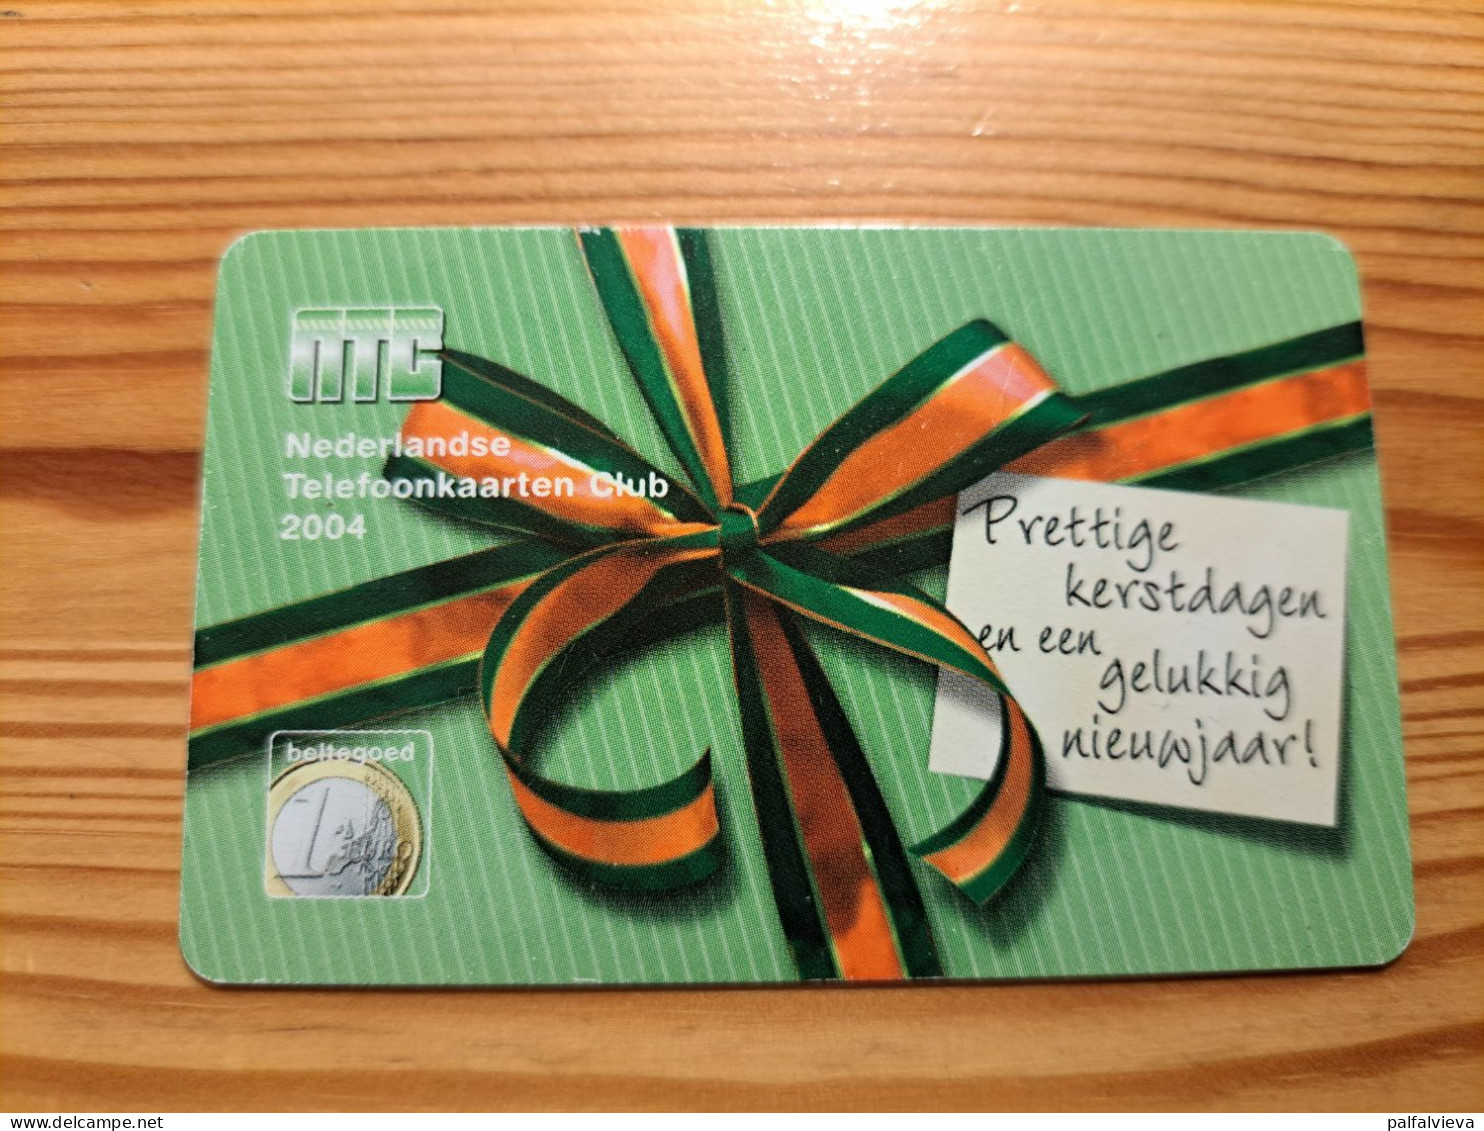 Prepaid Phonecard Netherlands, Budgetphone - NTC, Christmas - [3] Sim Cards, Prepaid & Refills